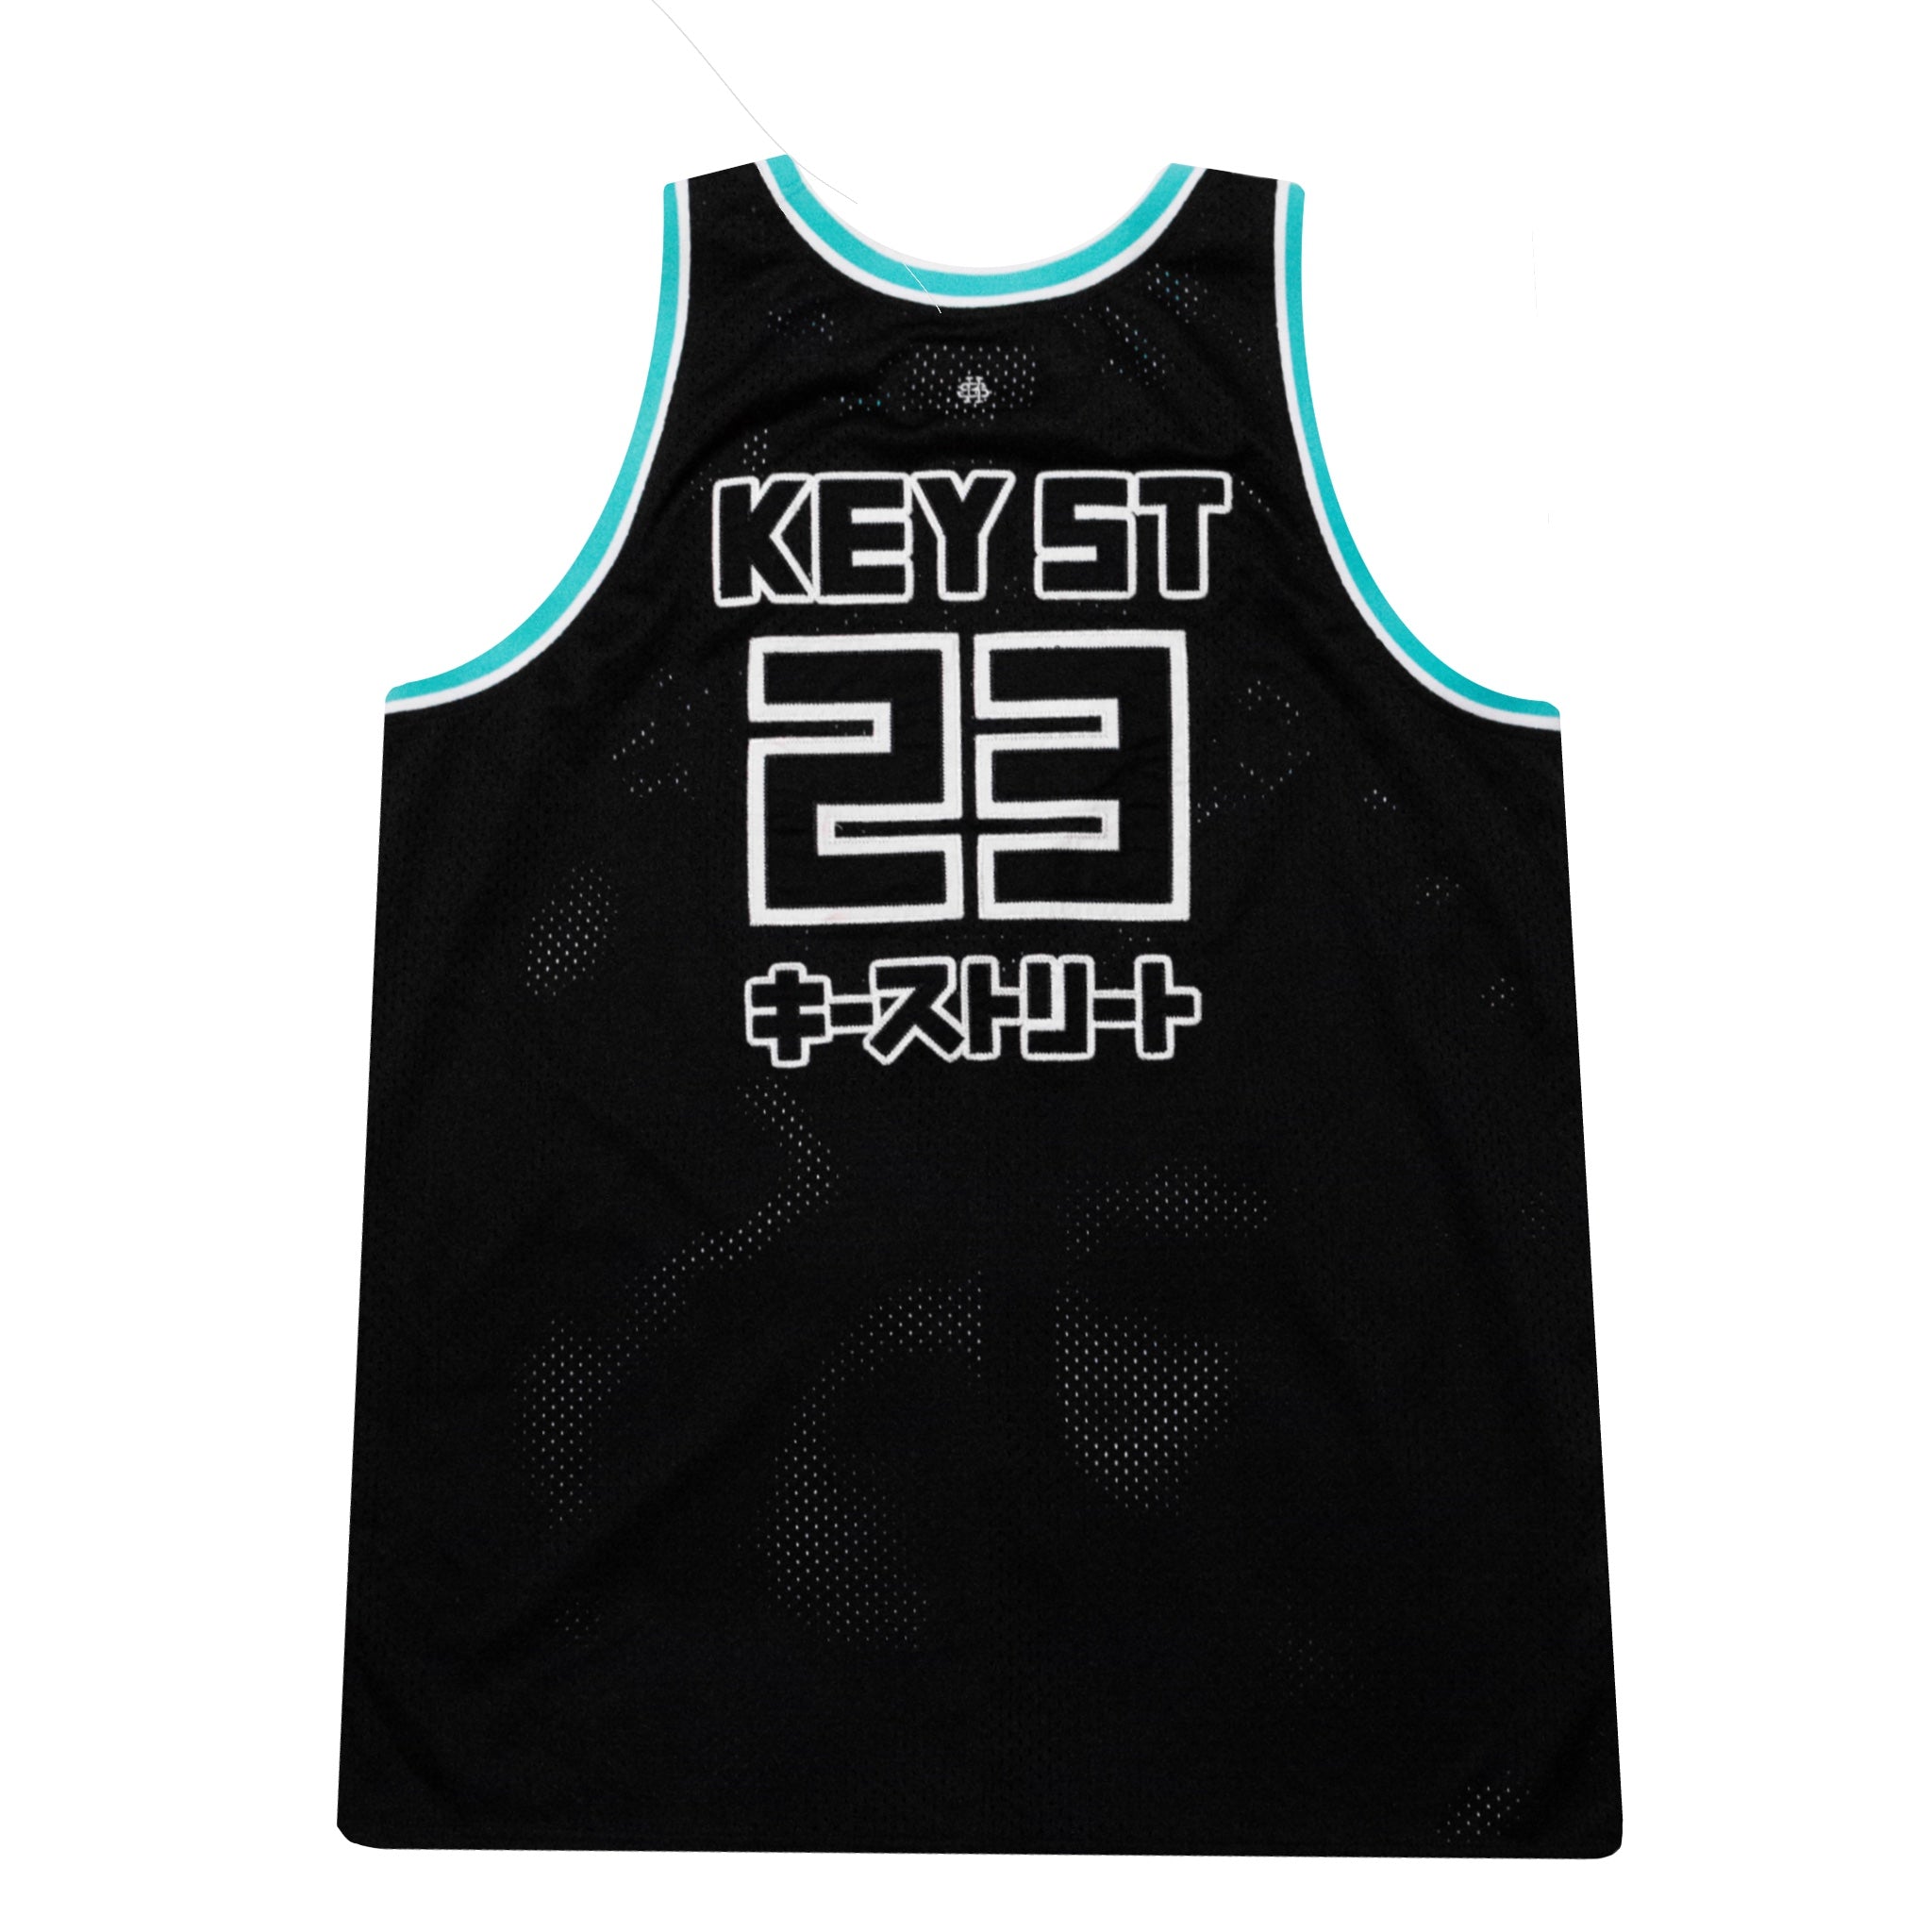 Key Street Black & Blue Basketball Jersey